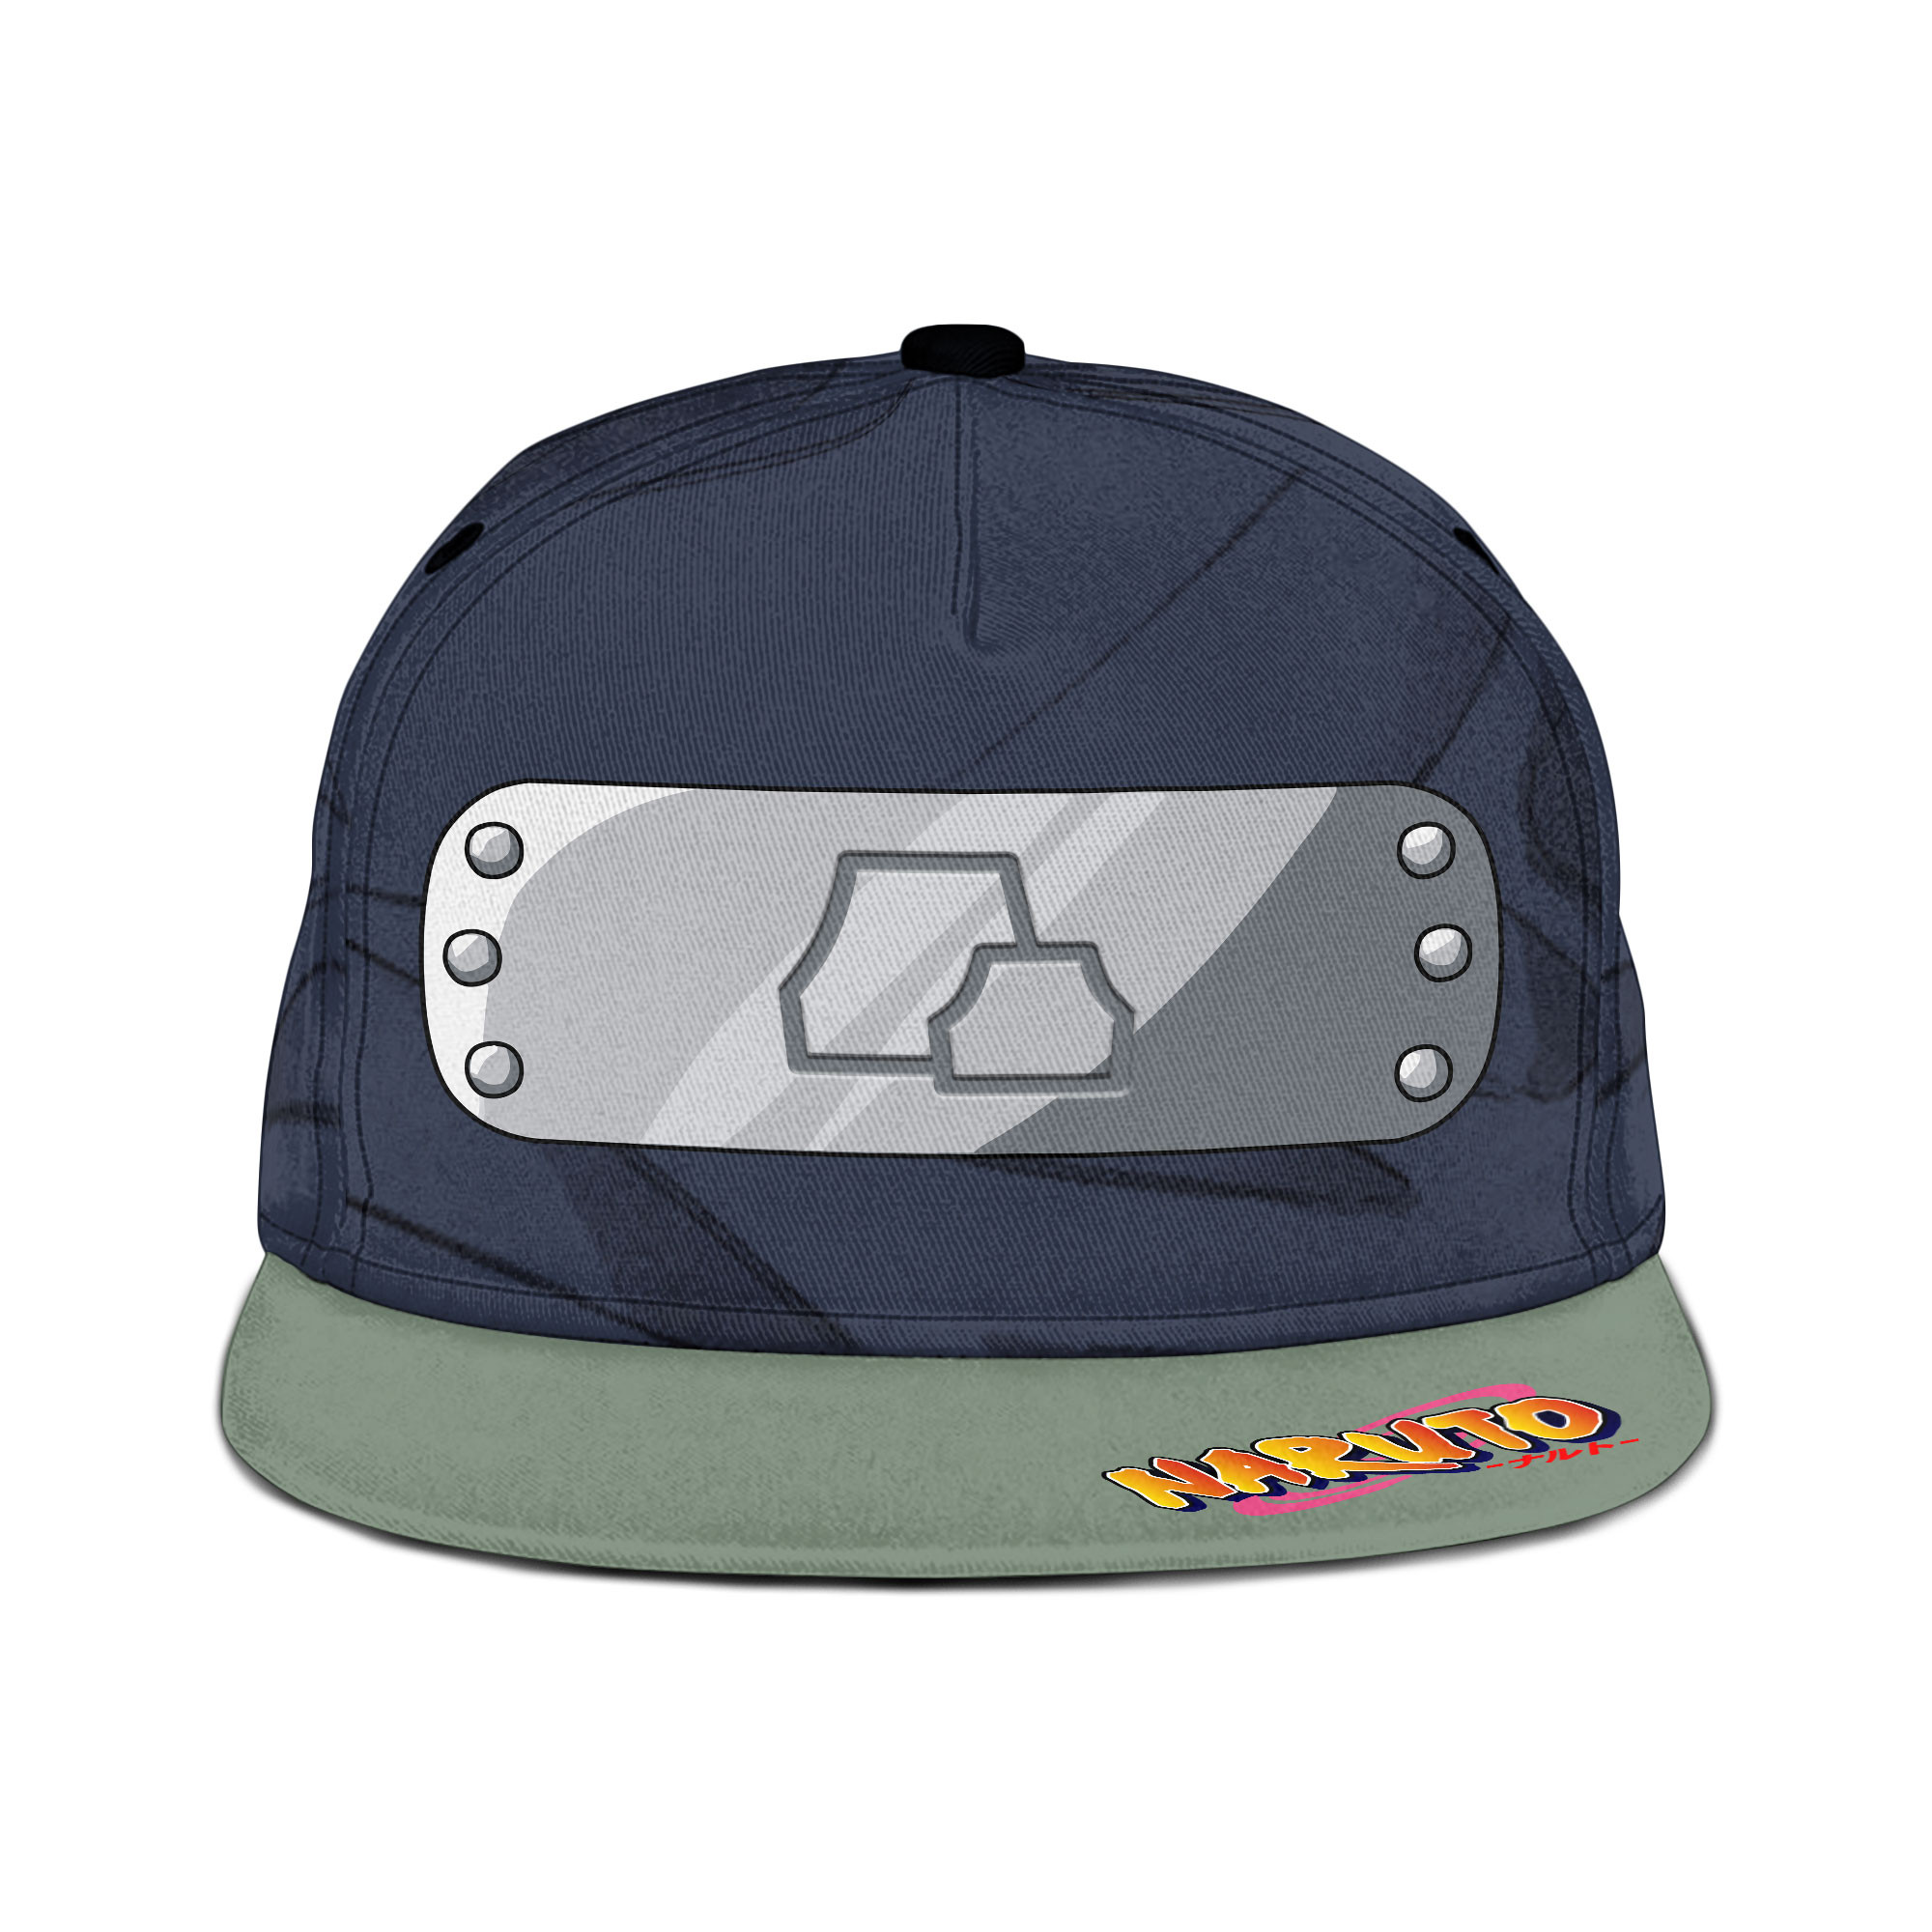 NEW Rock Village Symbol For Otaku Cap hat1